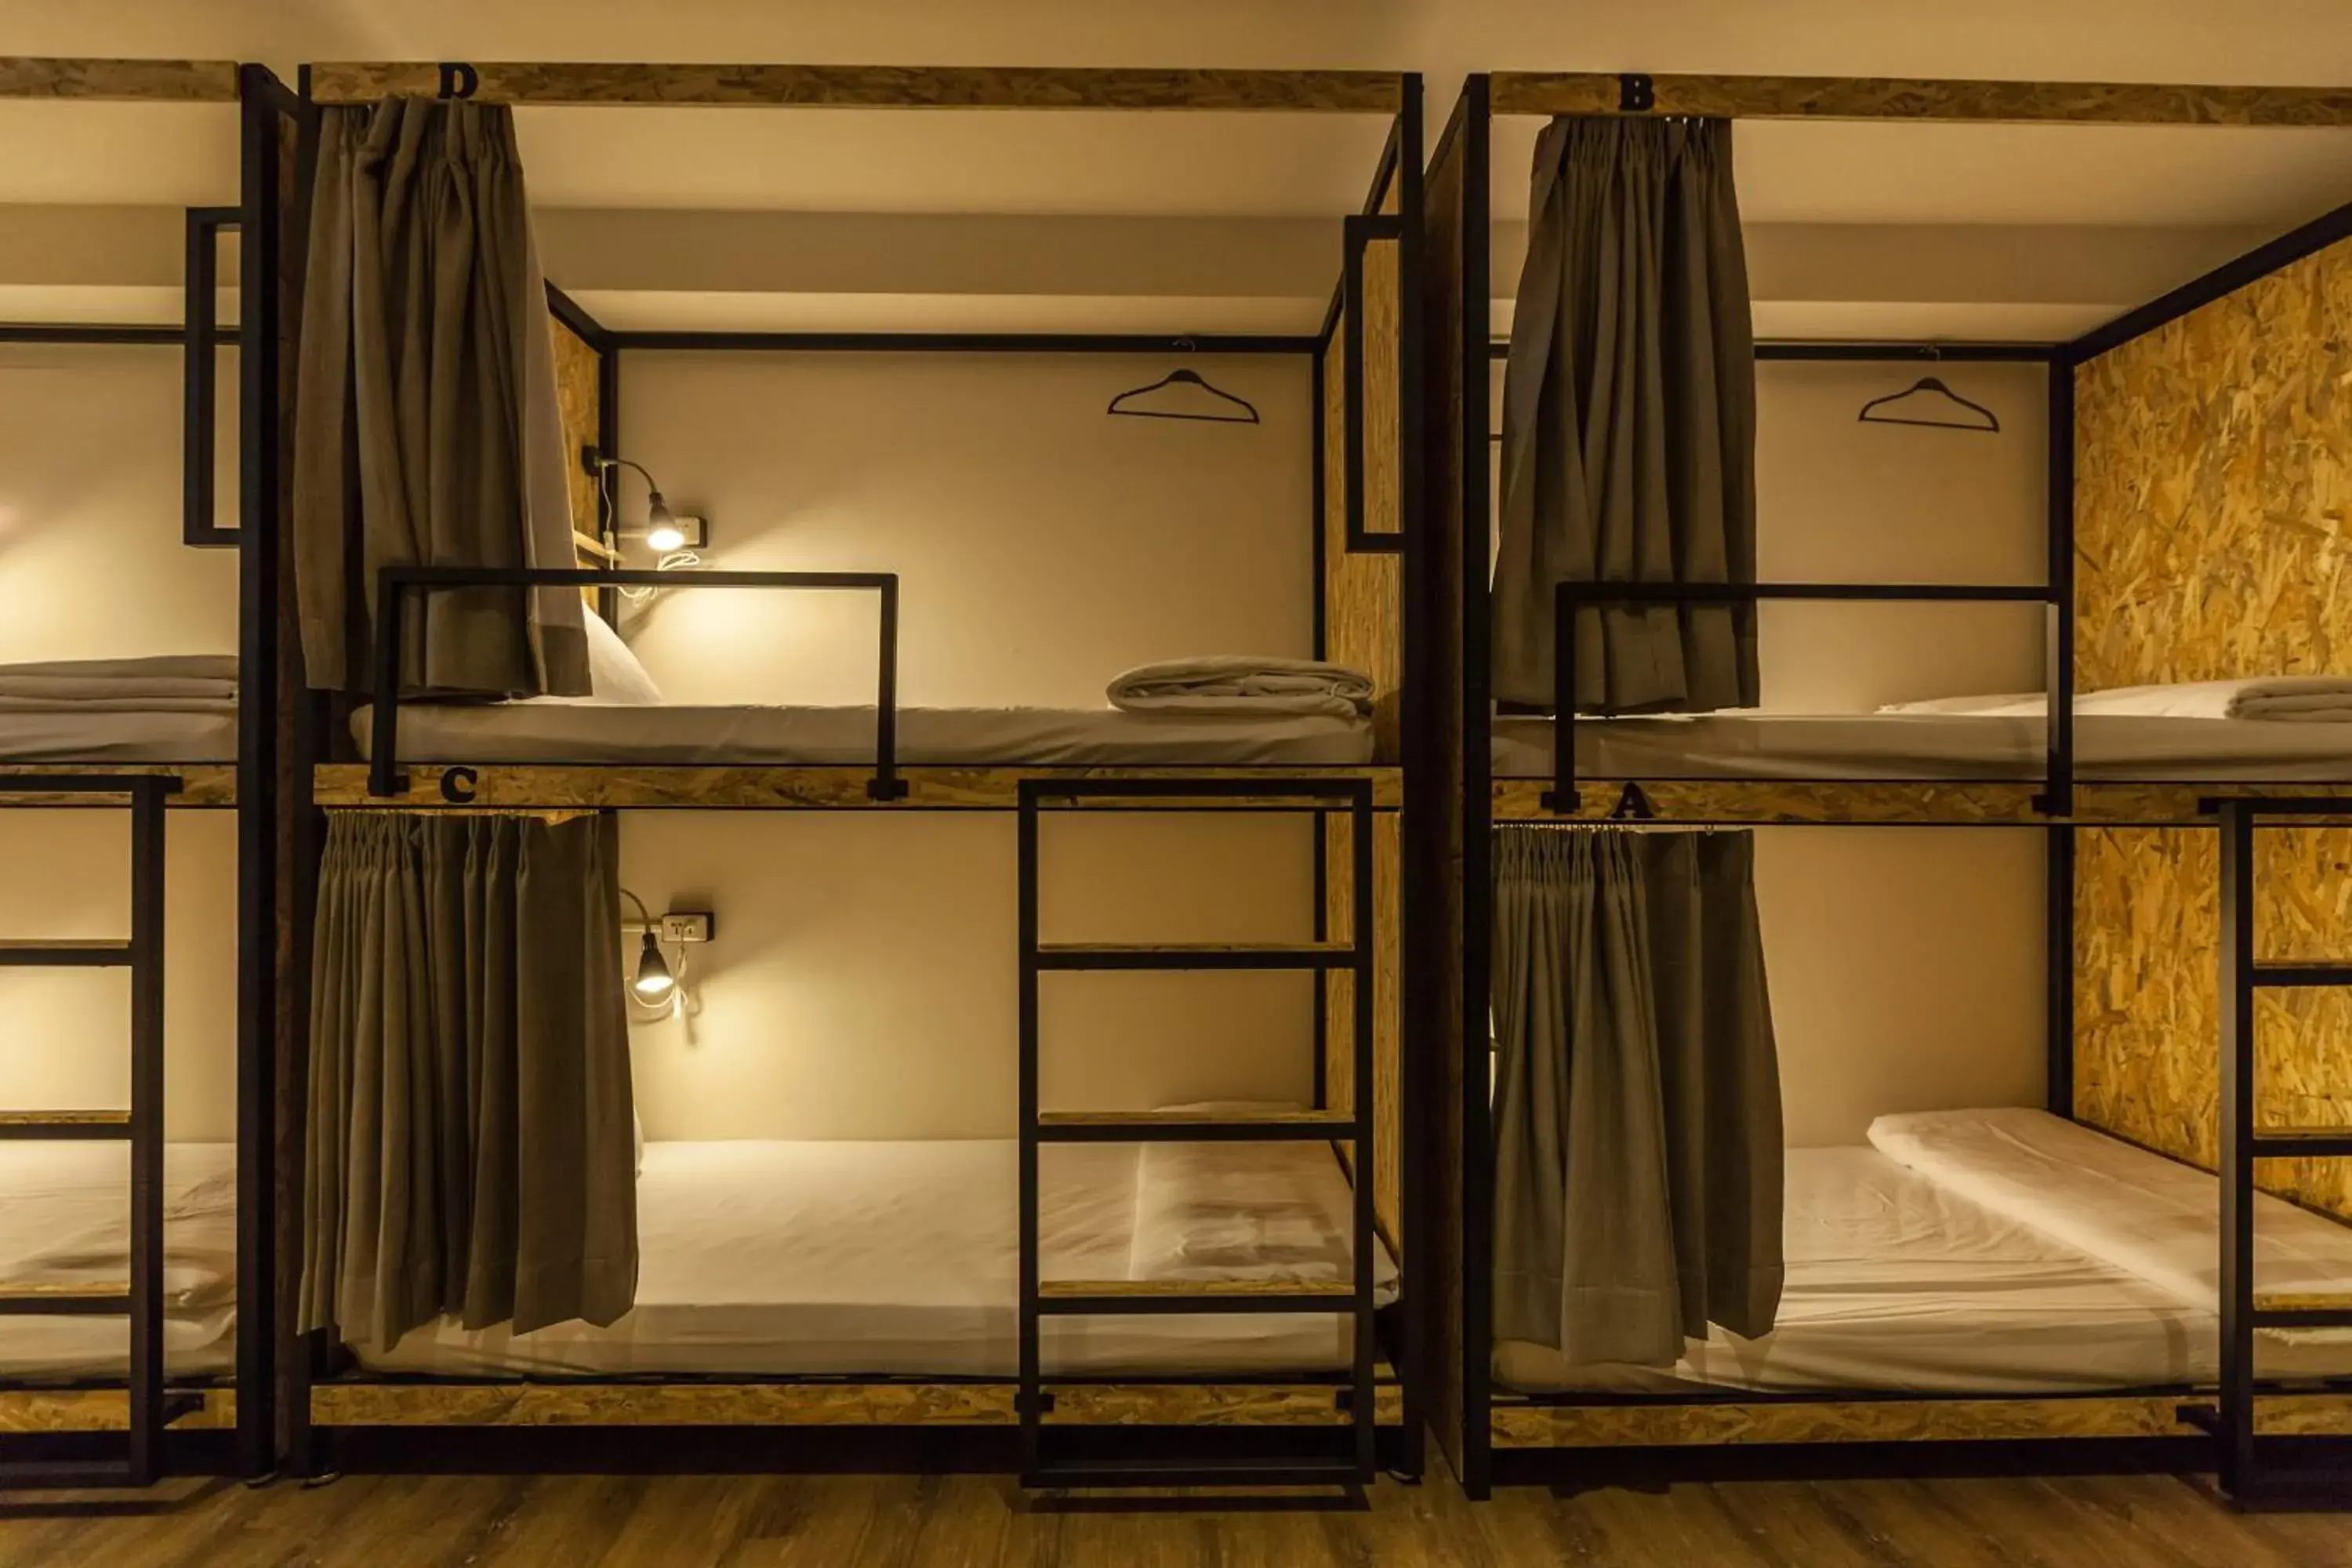 Bunk Bed in Mini Voyage Hostel